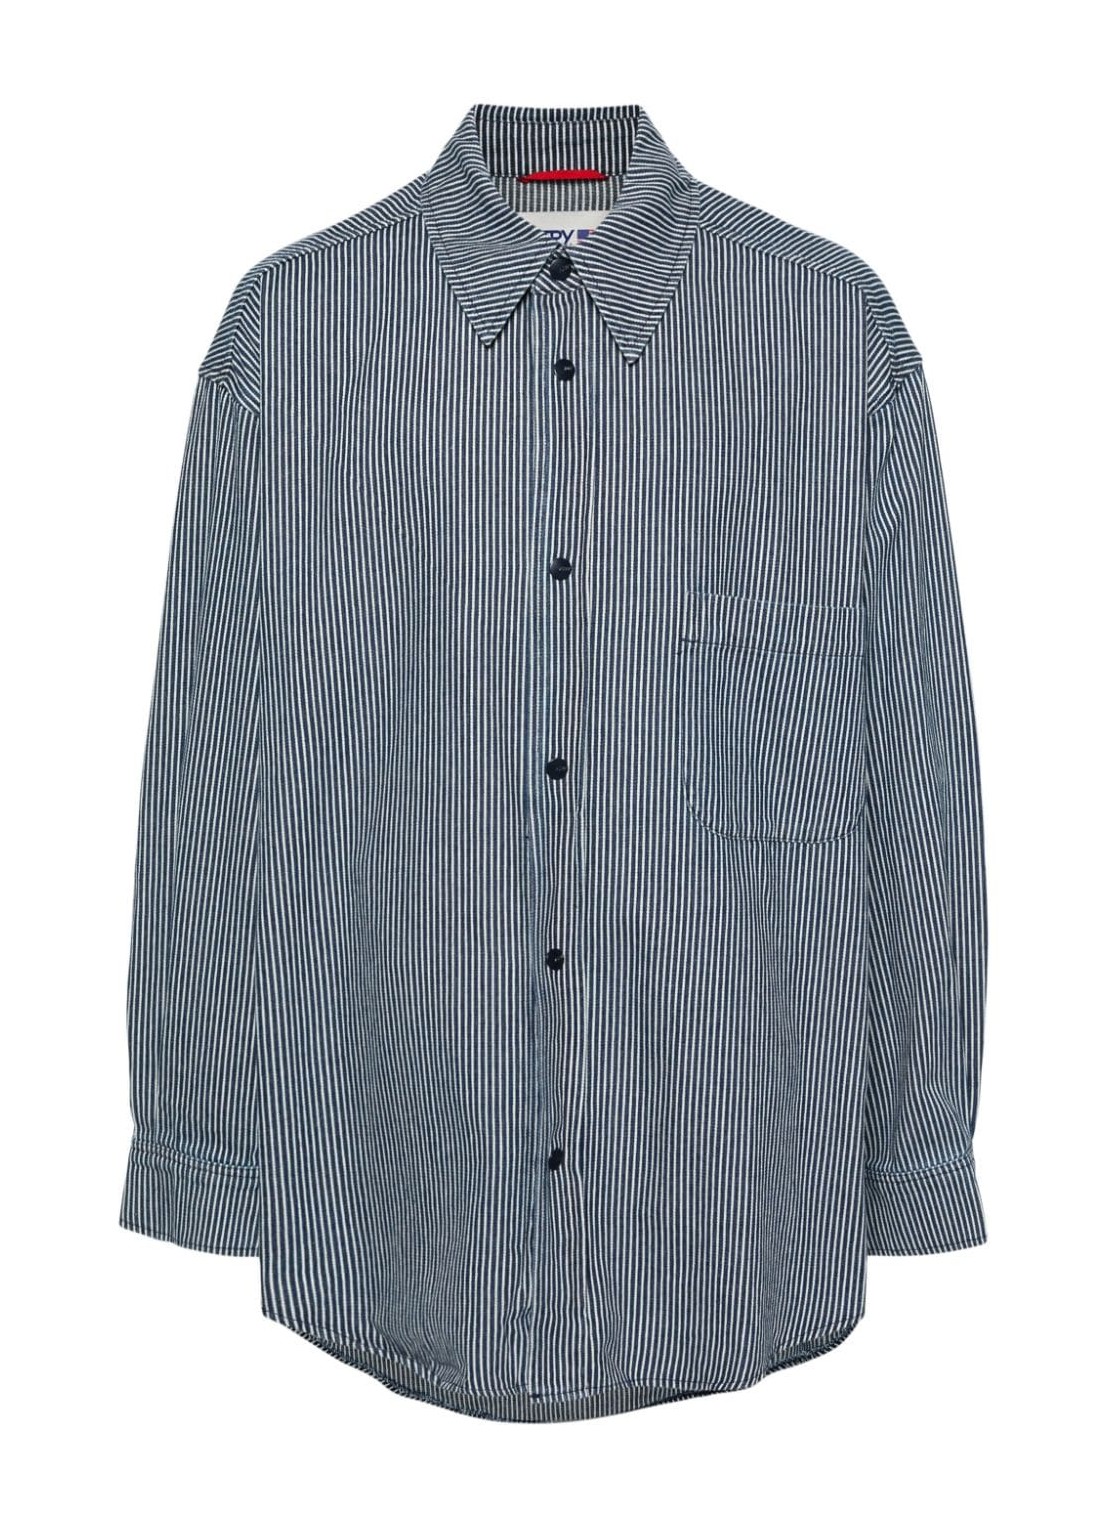 Camiseria autry shirt man shirt main man stpm584x 584x talla L
 